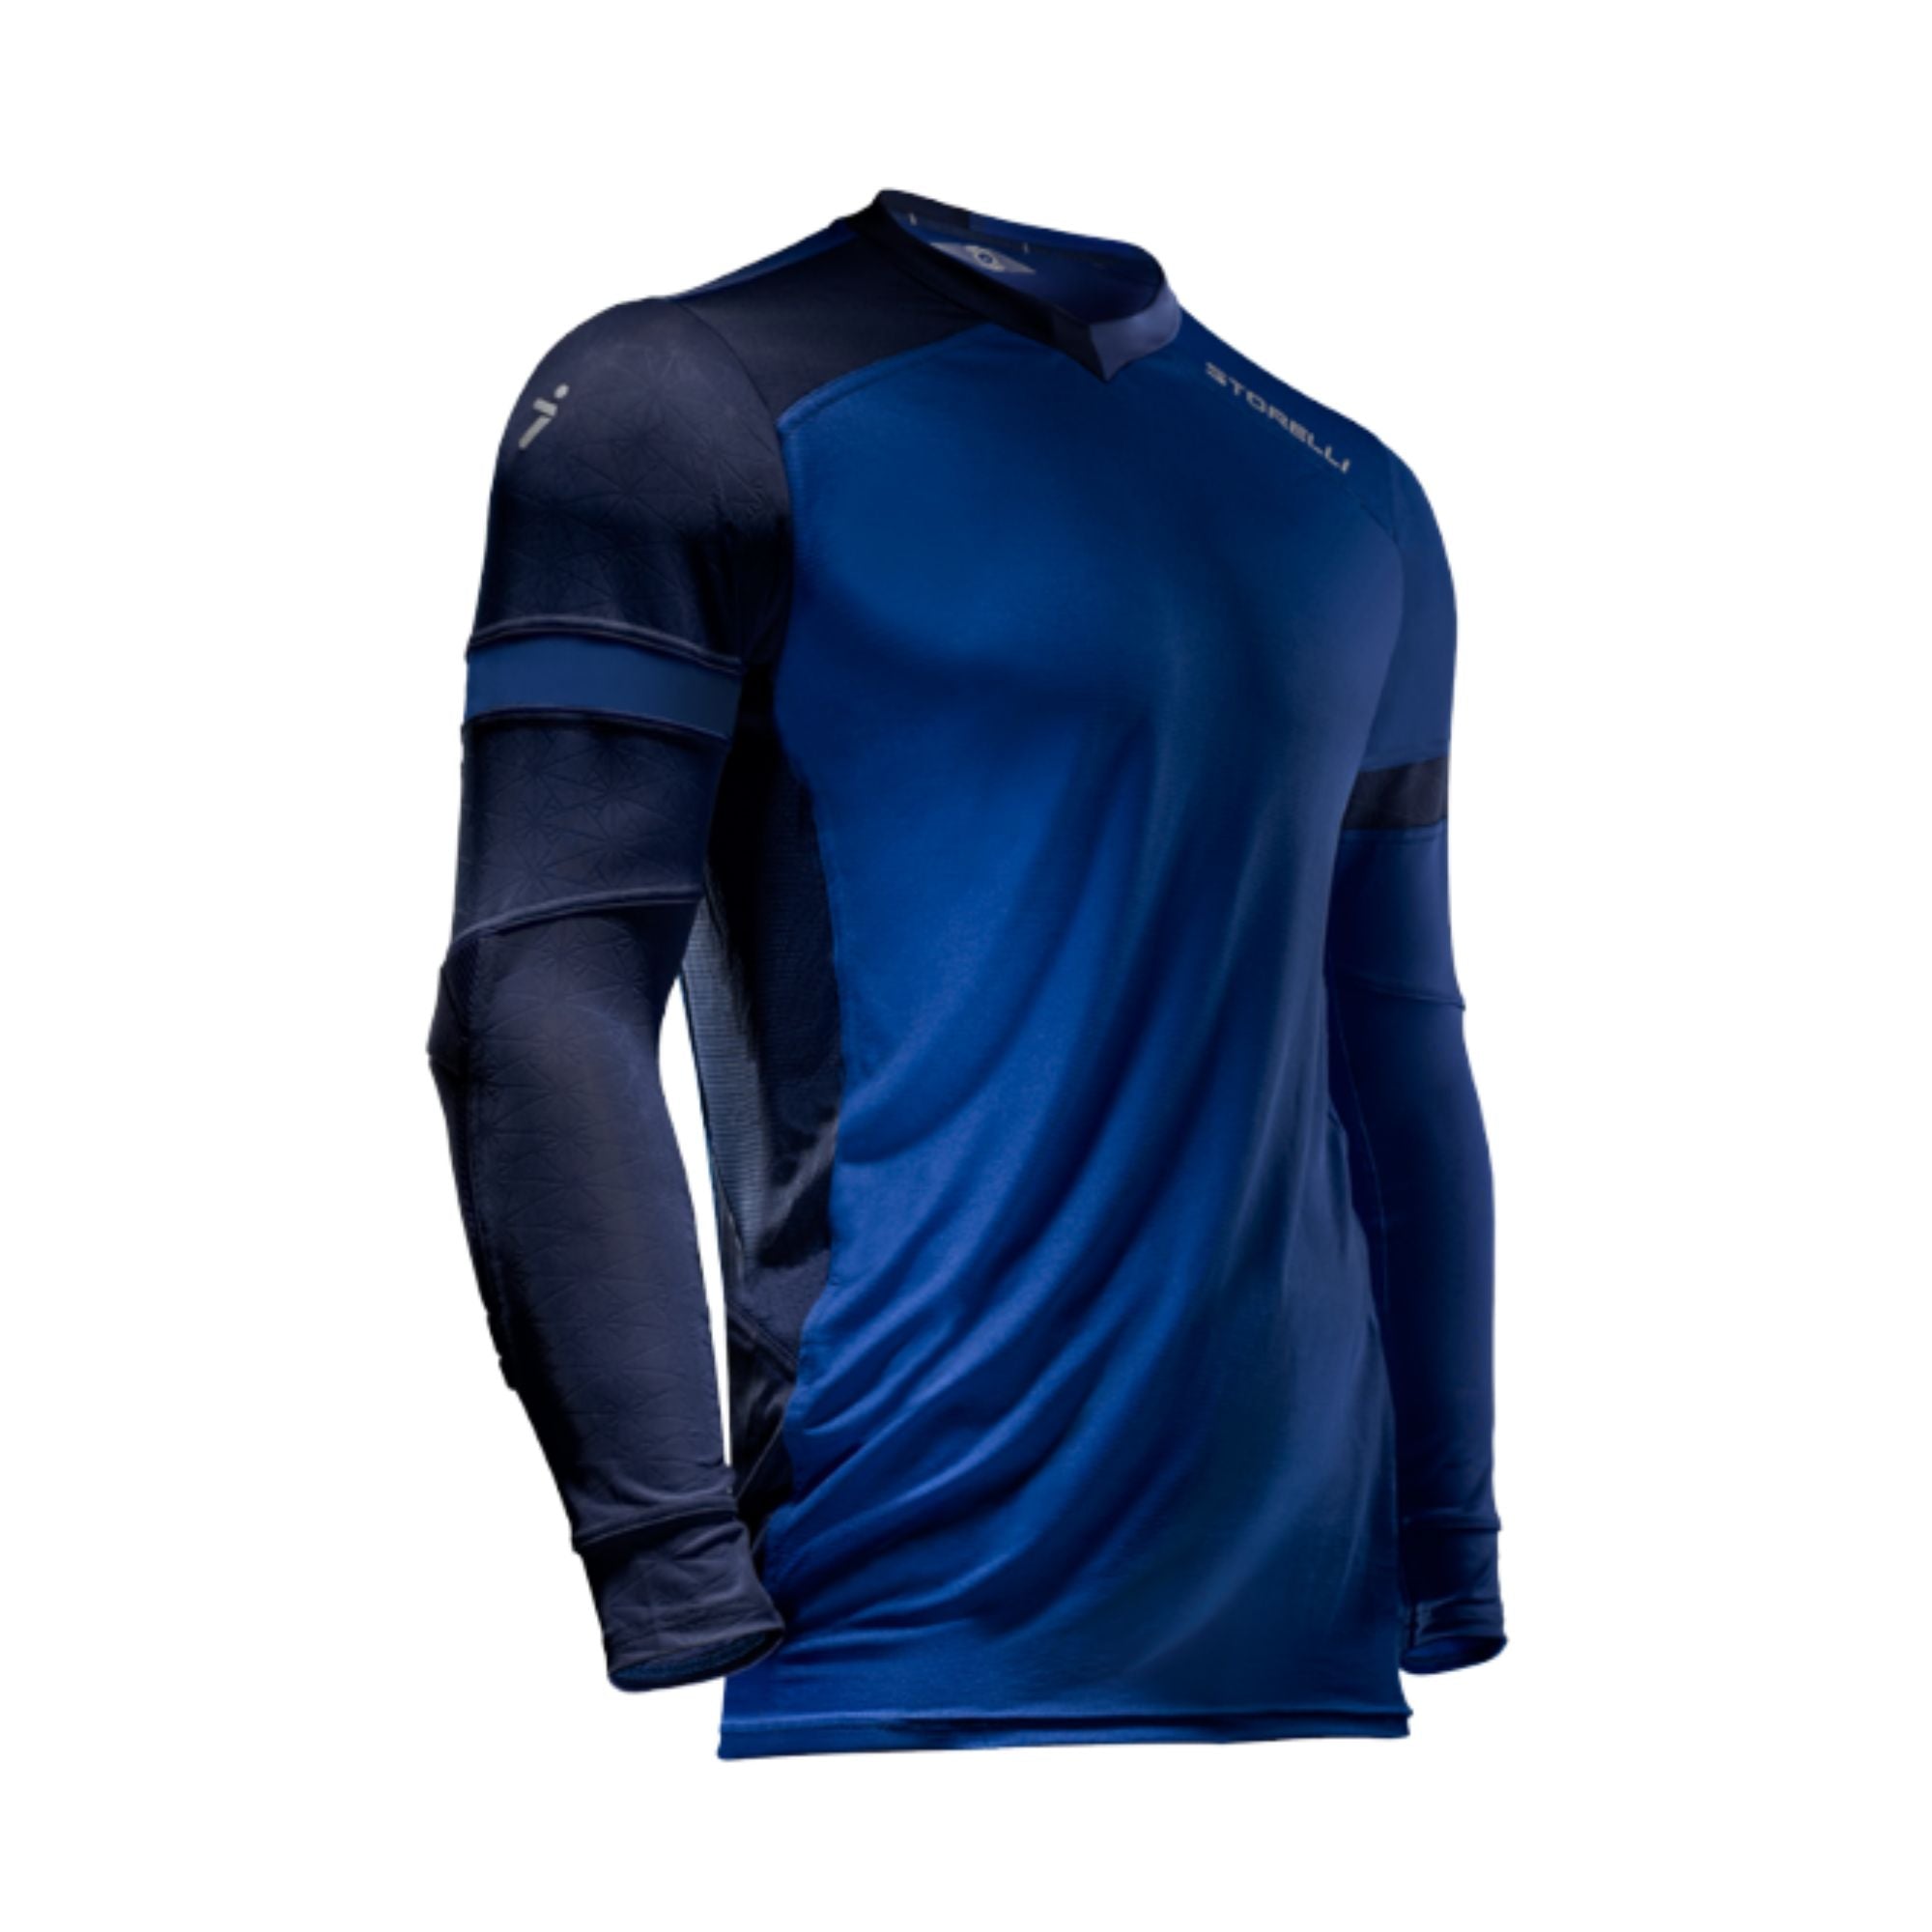 Goalkeeper Jersey by Storelli - 'Hydra' Blue - ITASPORT